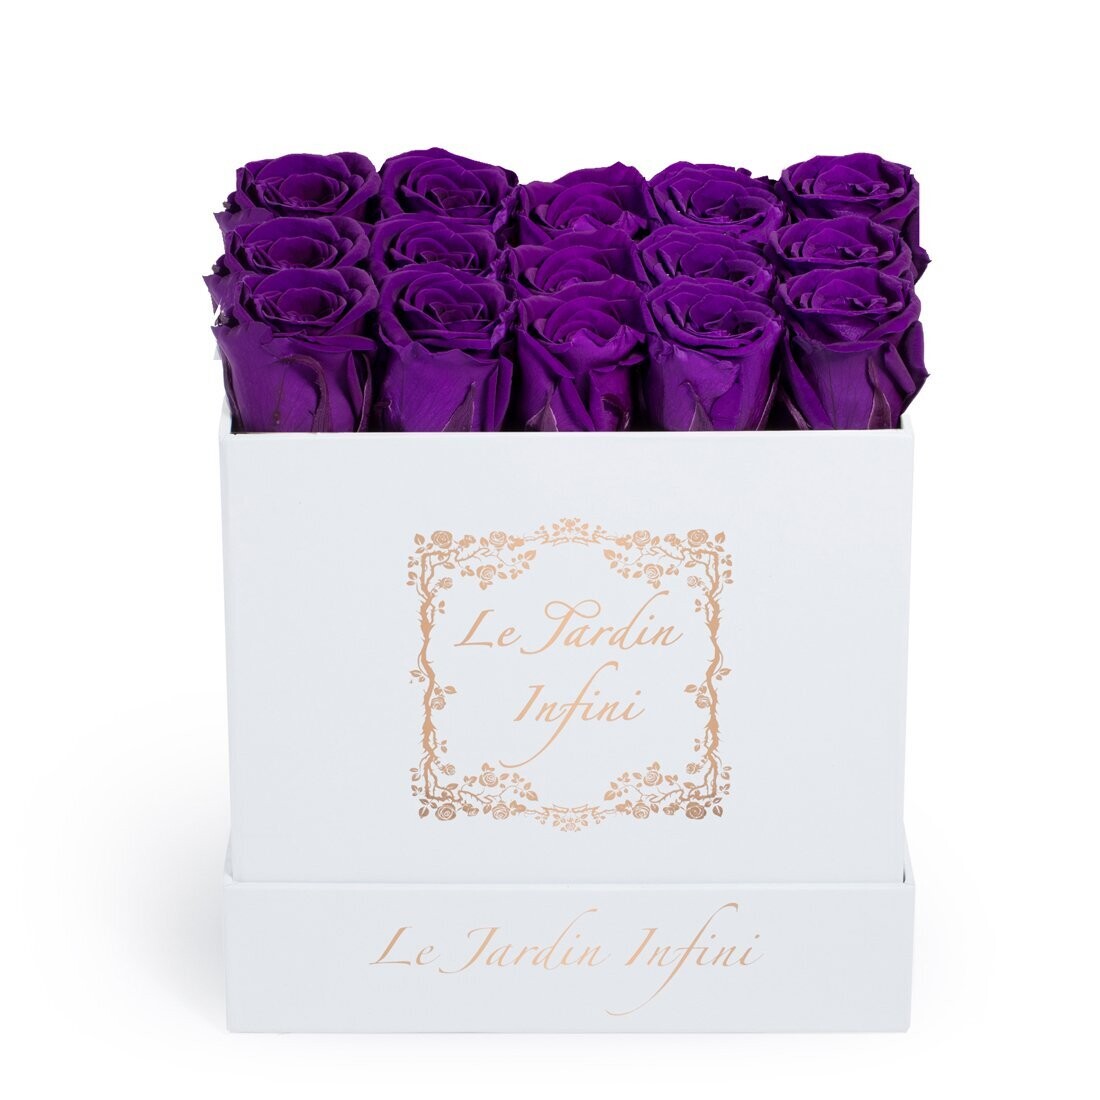 Vibrant Purple Preserved Roses - Medium Square White Box